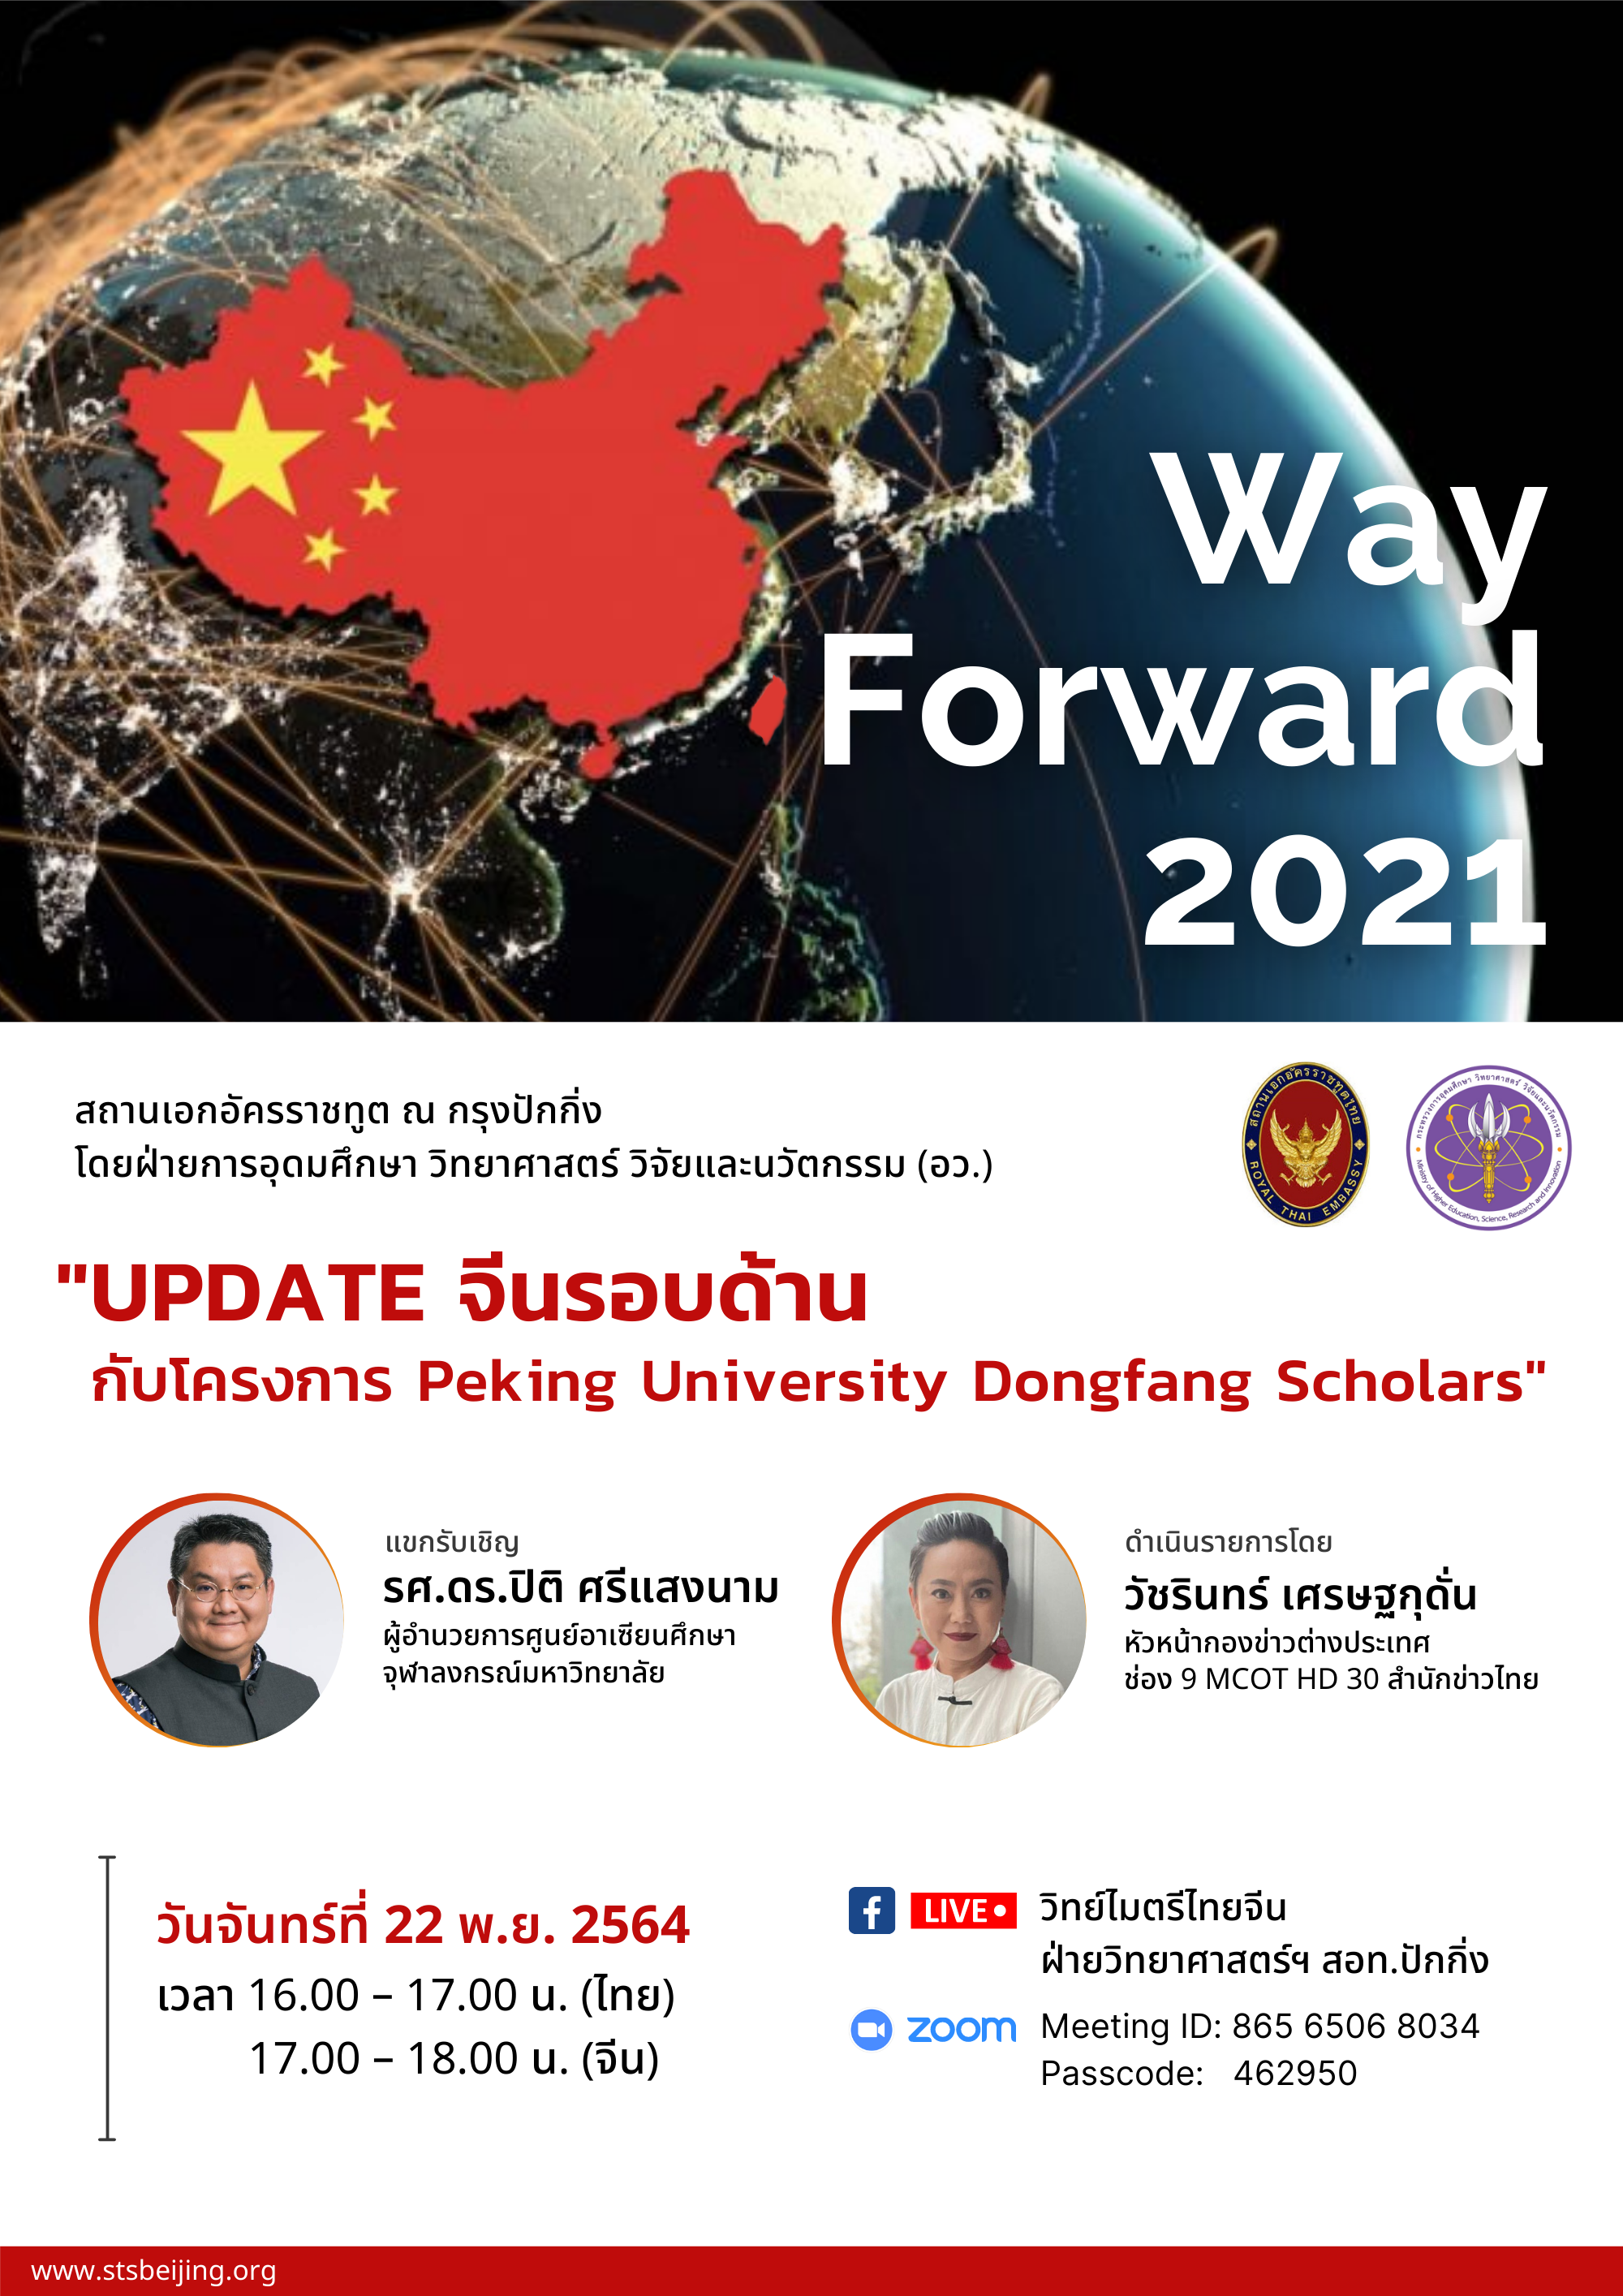 Way Forward 2021 ตอนพิเศษ “UPDATE จีนรอบด้าน กับโครงการ Peking University Dongfang Scholars”